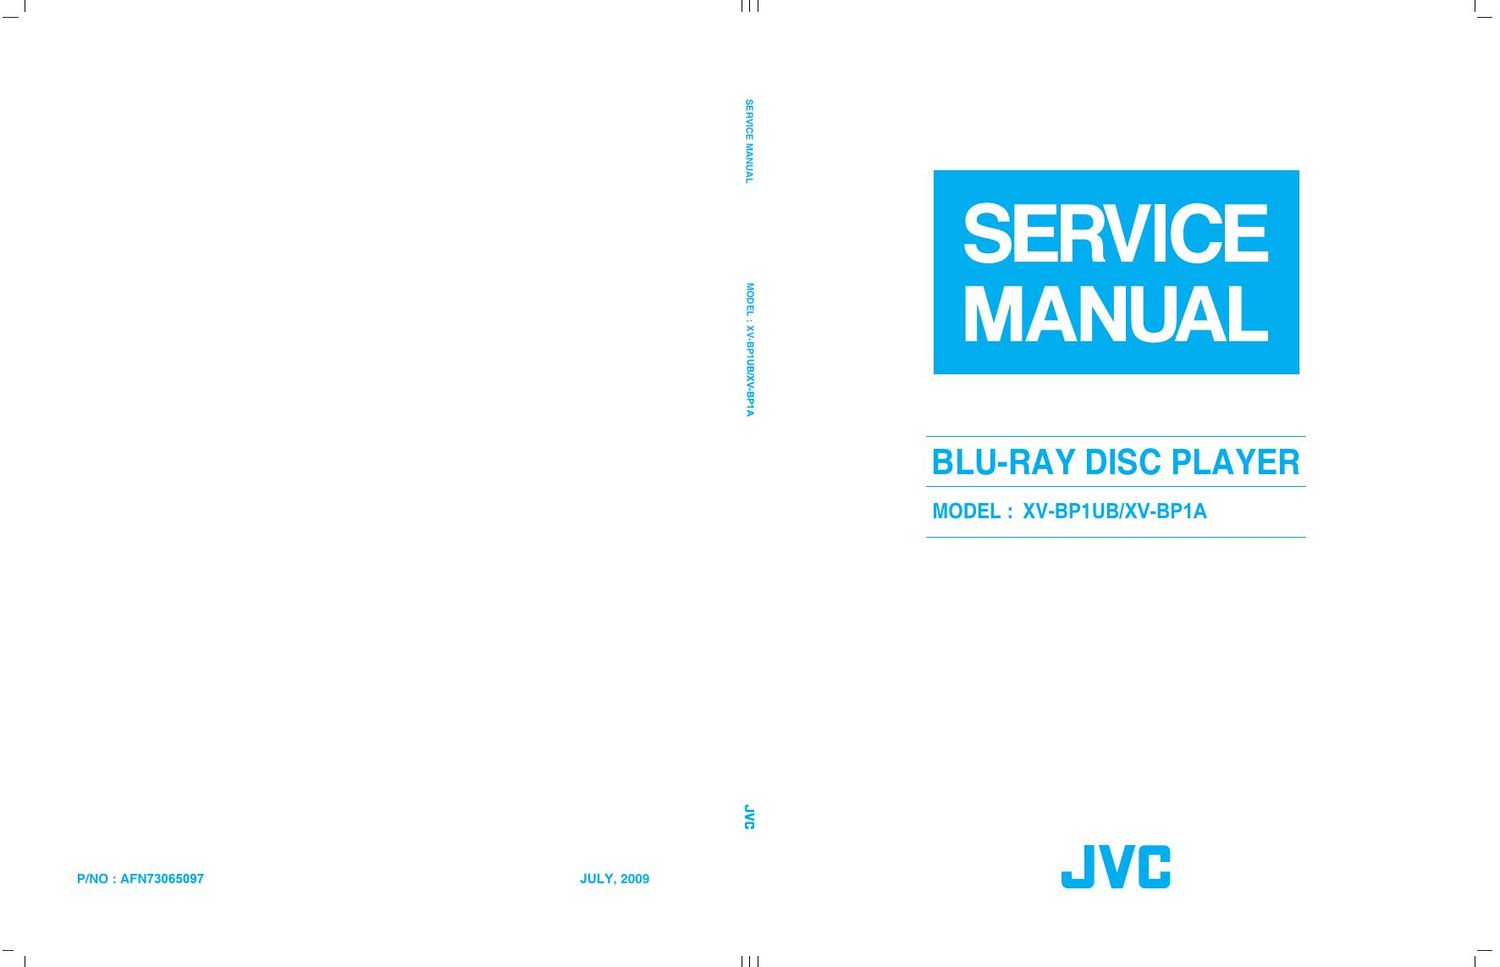 Jvc XVBP 1 UB Service Manual